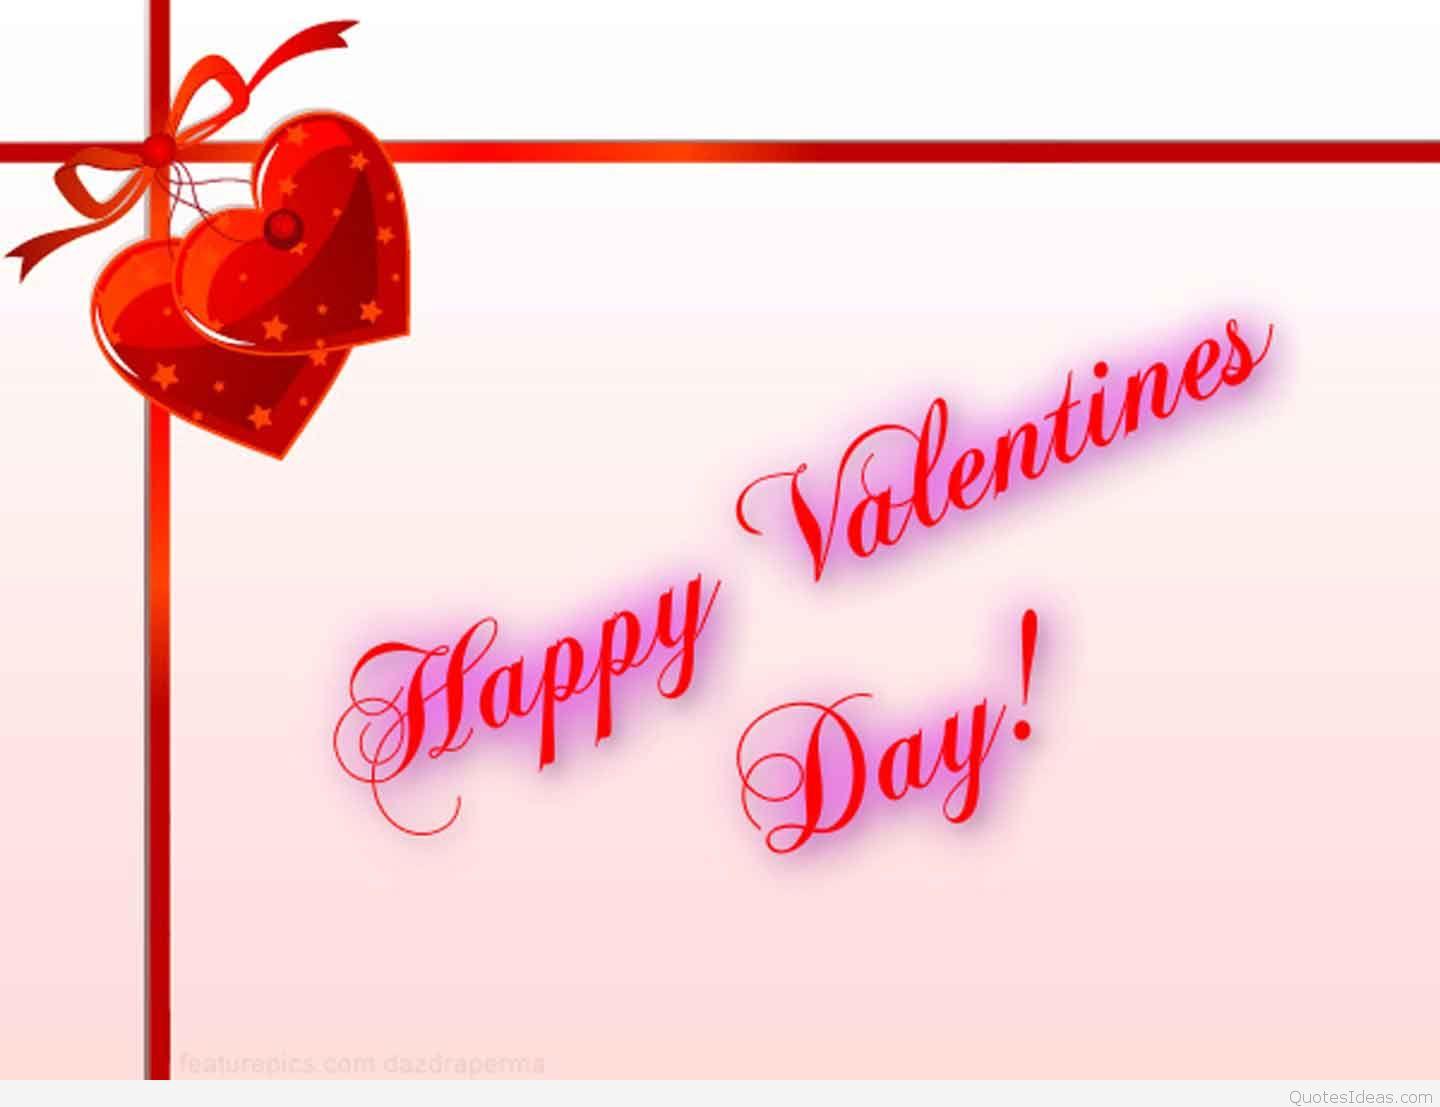 Cute Card Happy Valentine's day Wish image